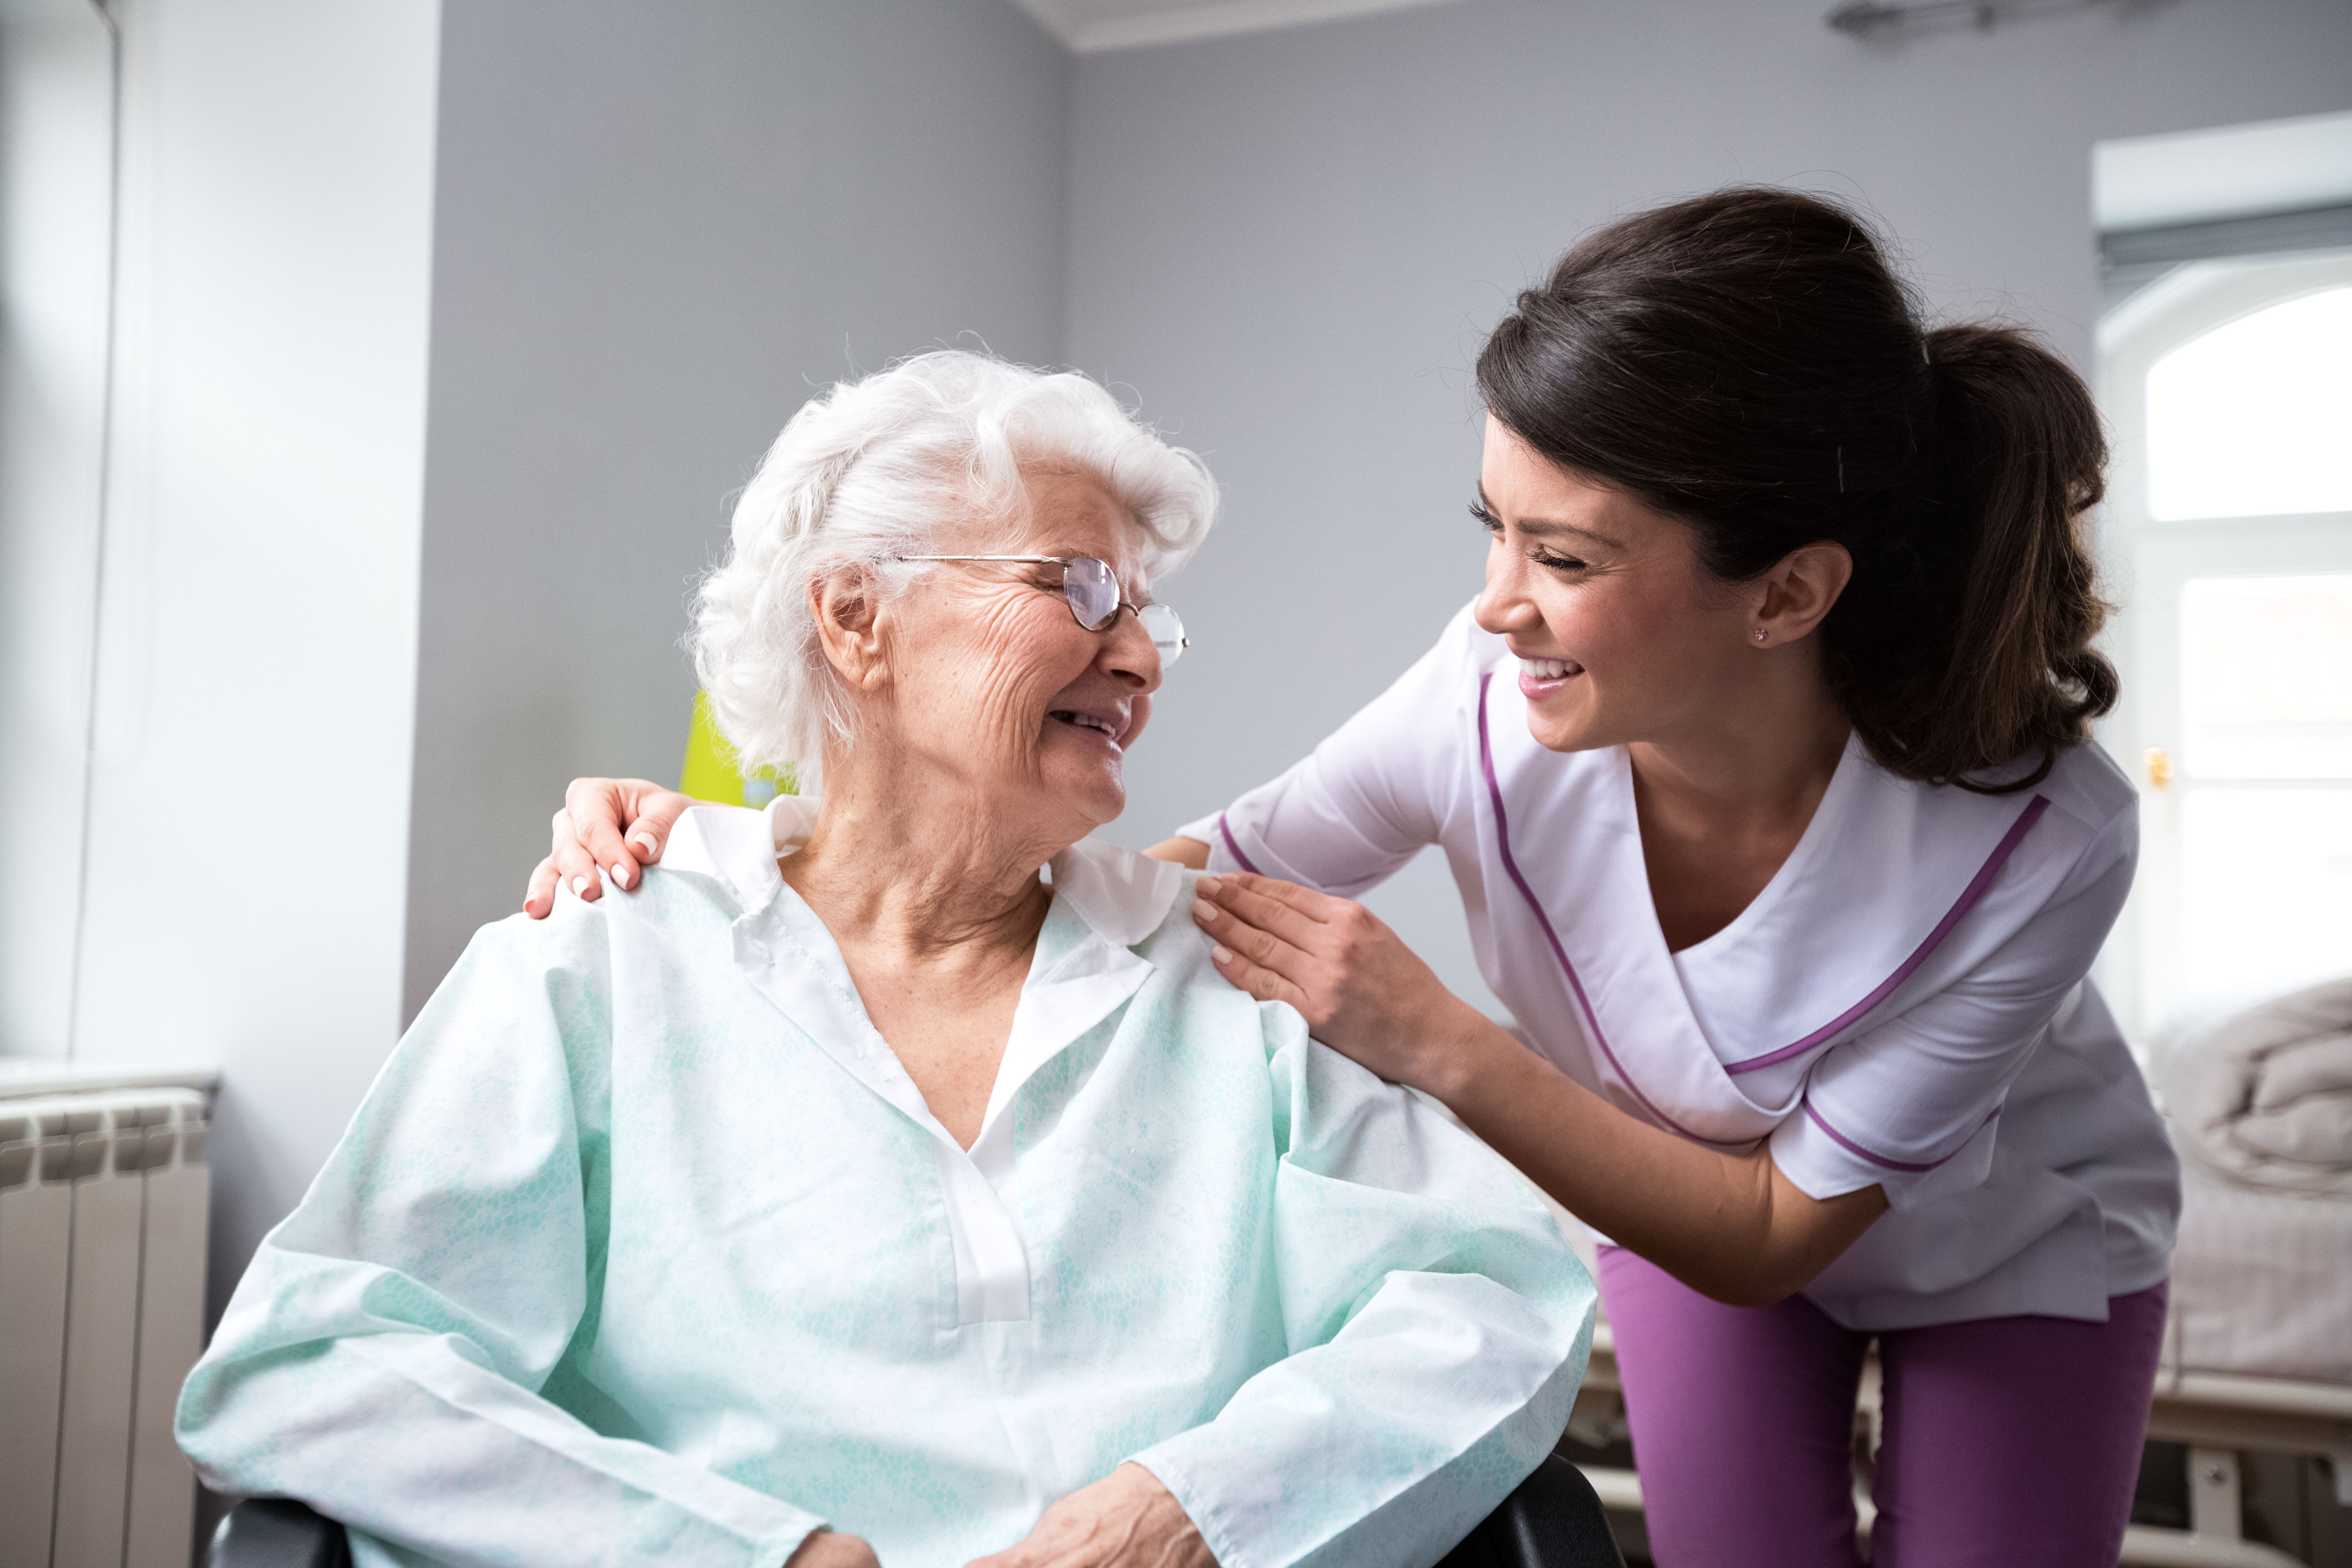 Older patient with nurse | Image credit: didesign – stock.adobe.com